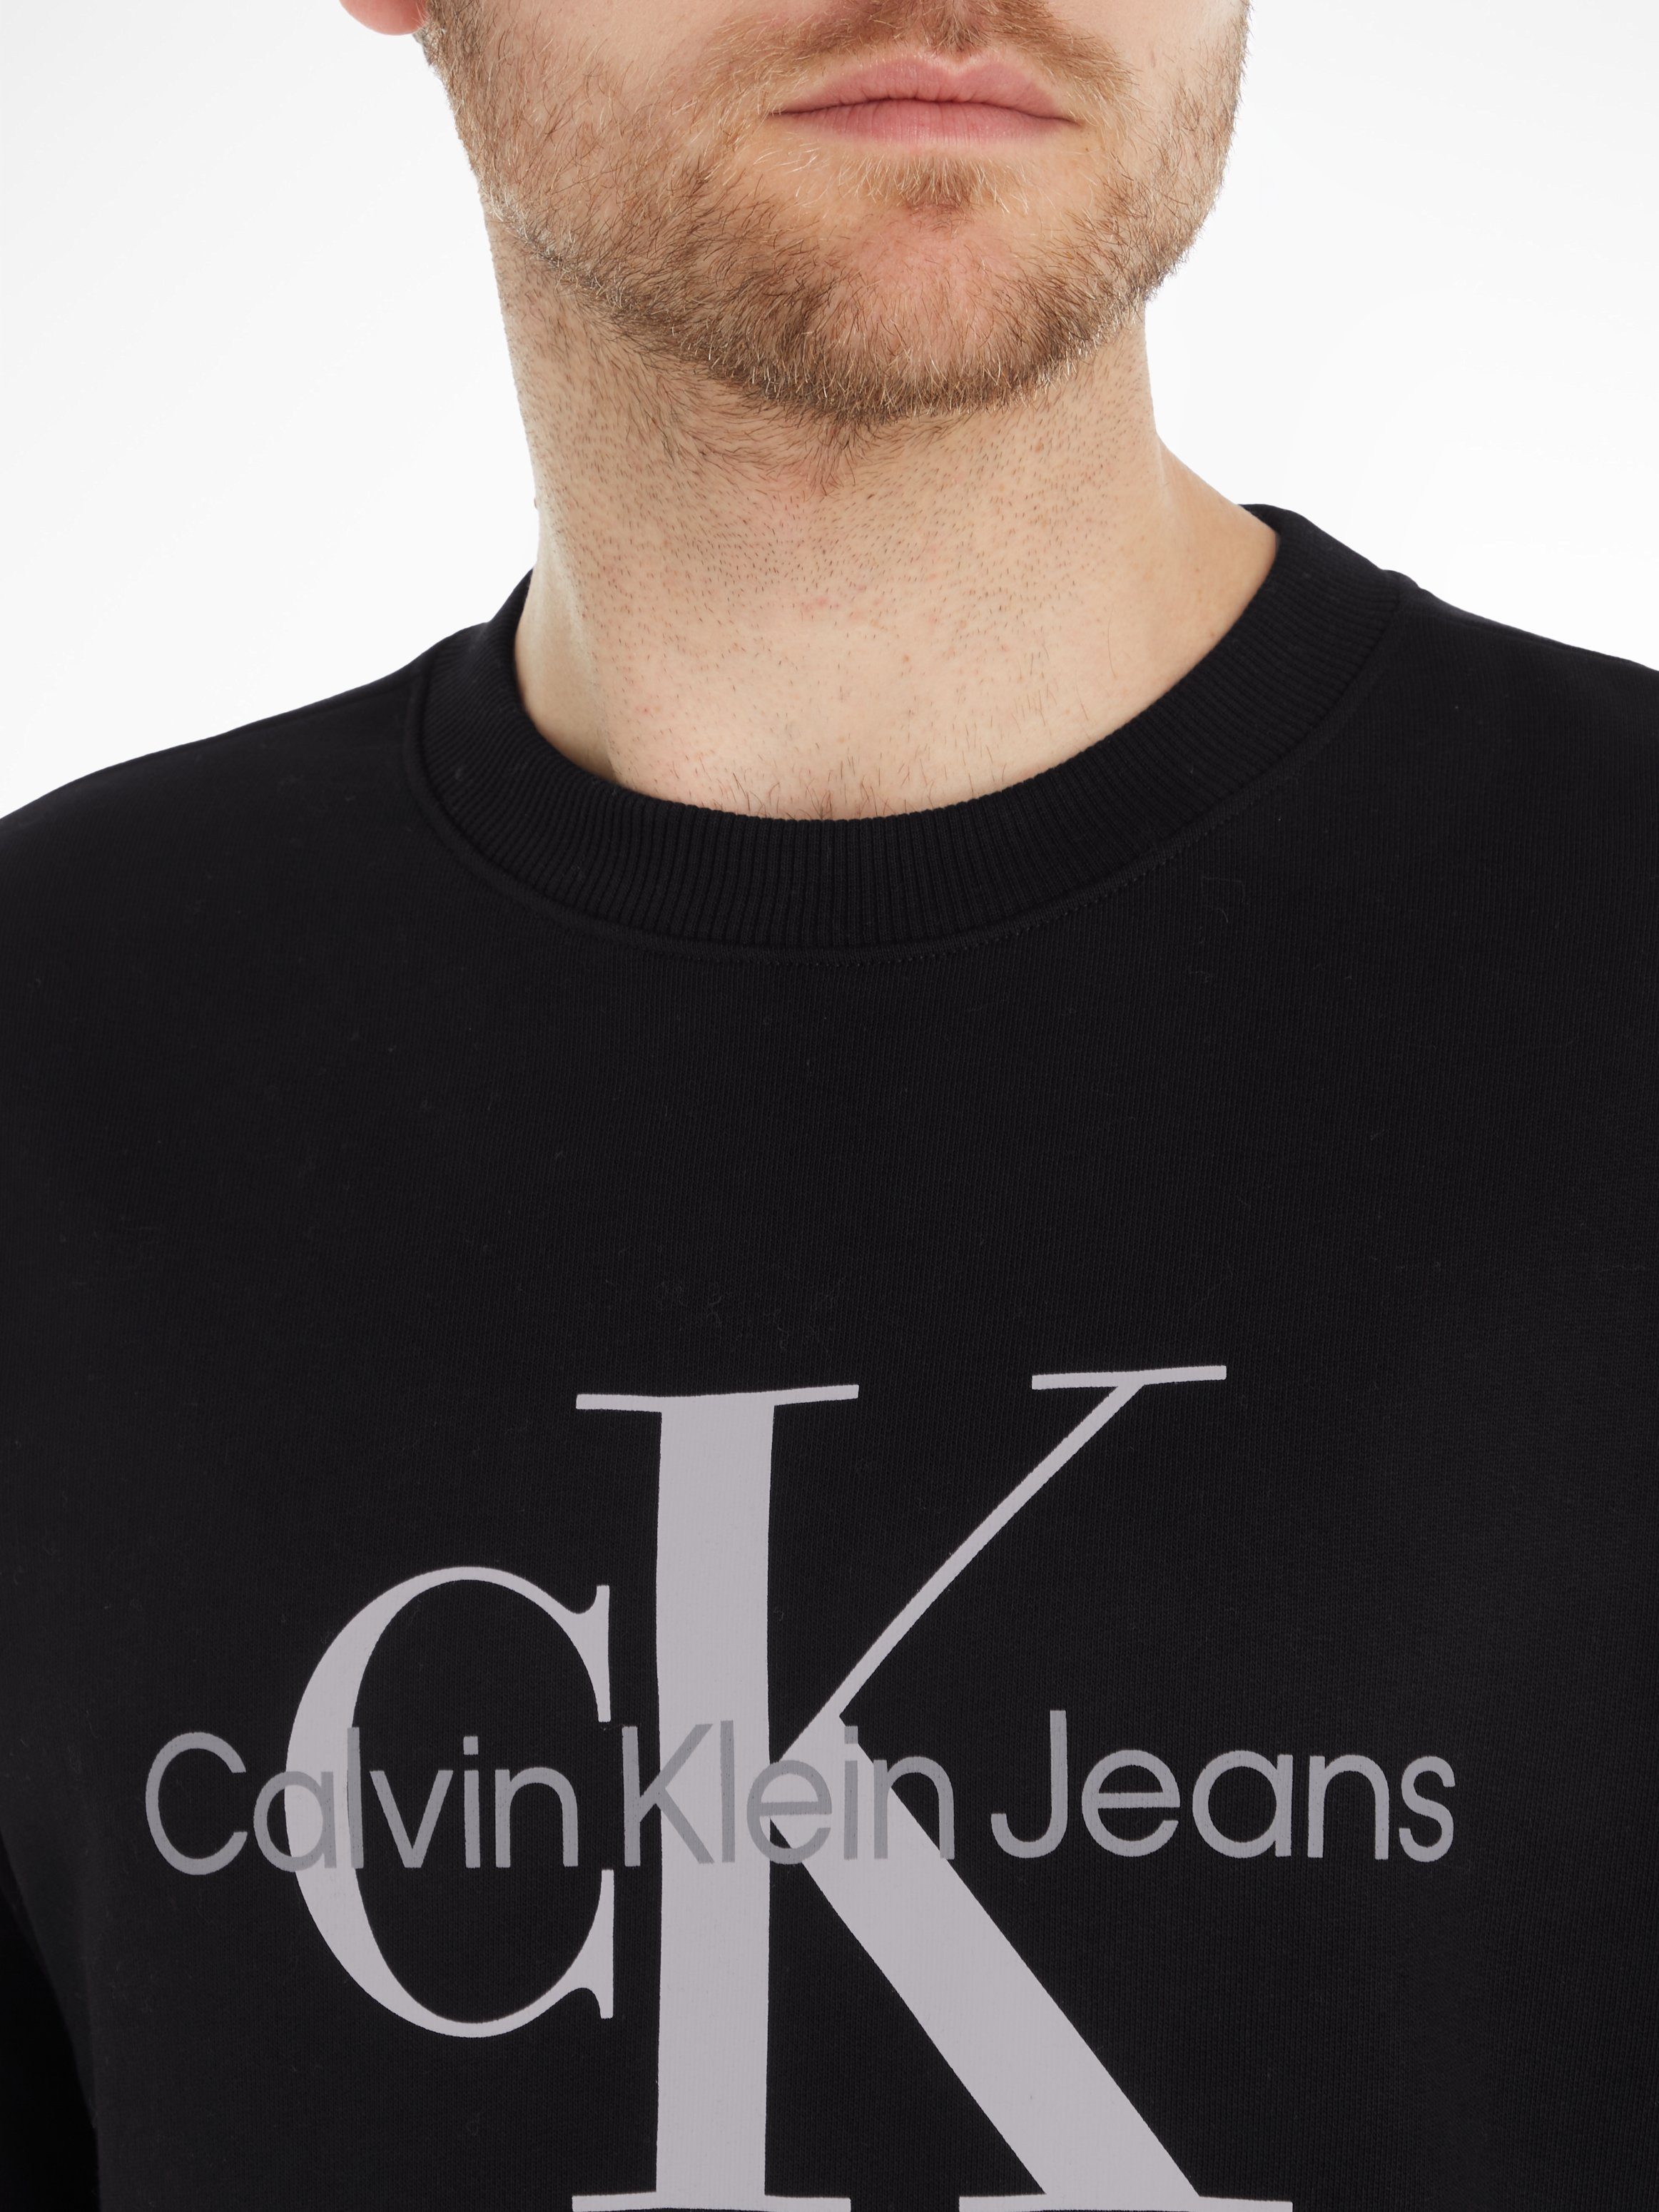 Calvin Klein Jeans Sweatshirt Black CREWNECK ICONIC MONOGRAM CK